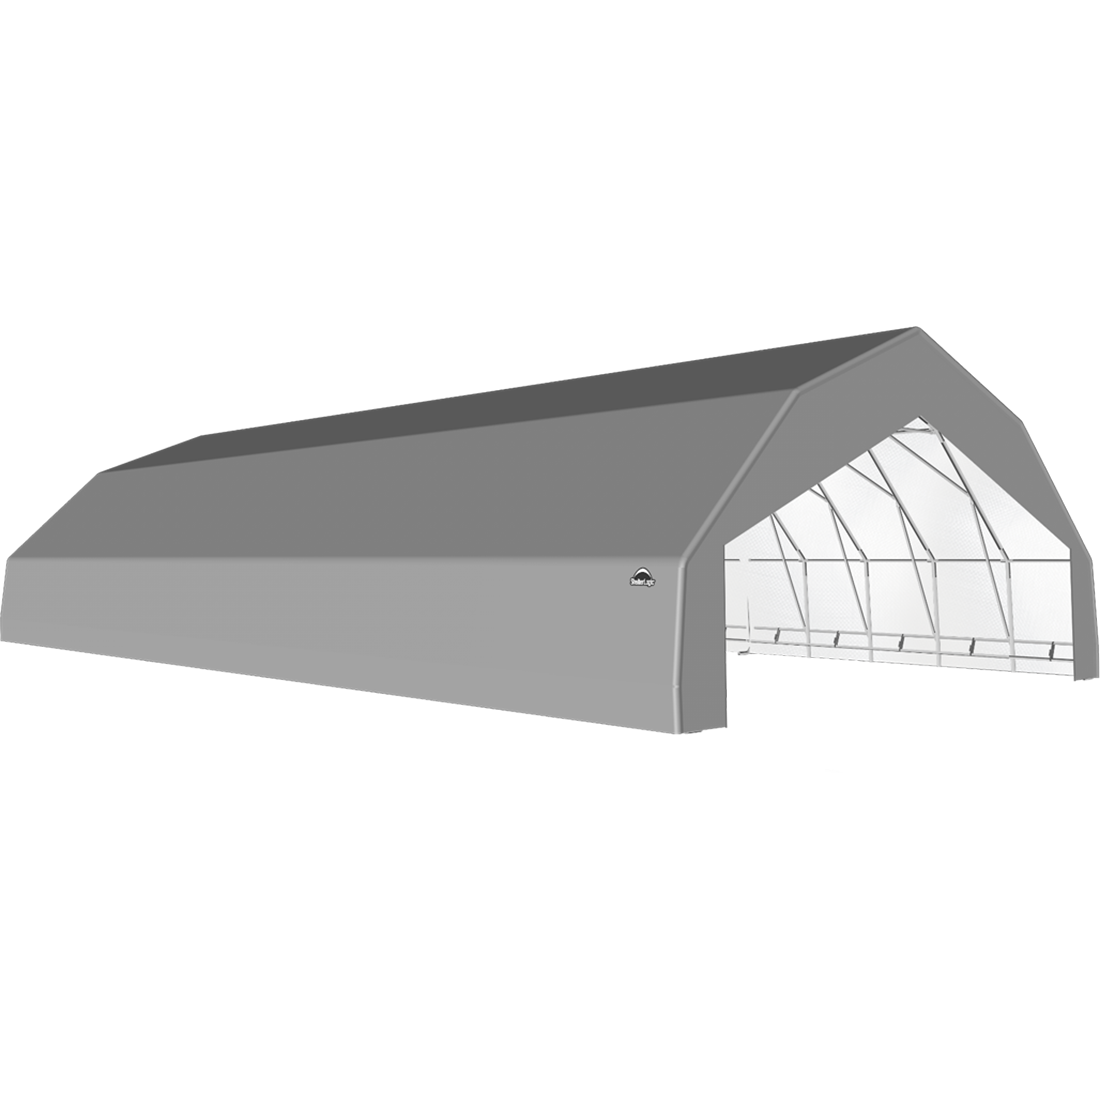 ShelterTech SP Series Barn Shelter, 30 ft. x 68 ft. x 15 ft. Heavy Duty PVC 14.5 oz. Gray